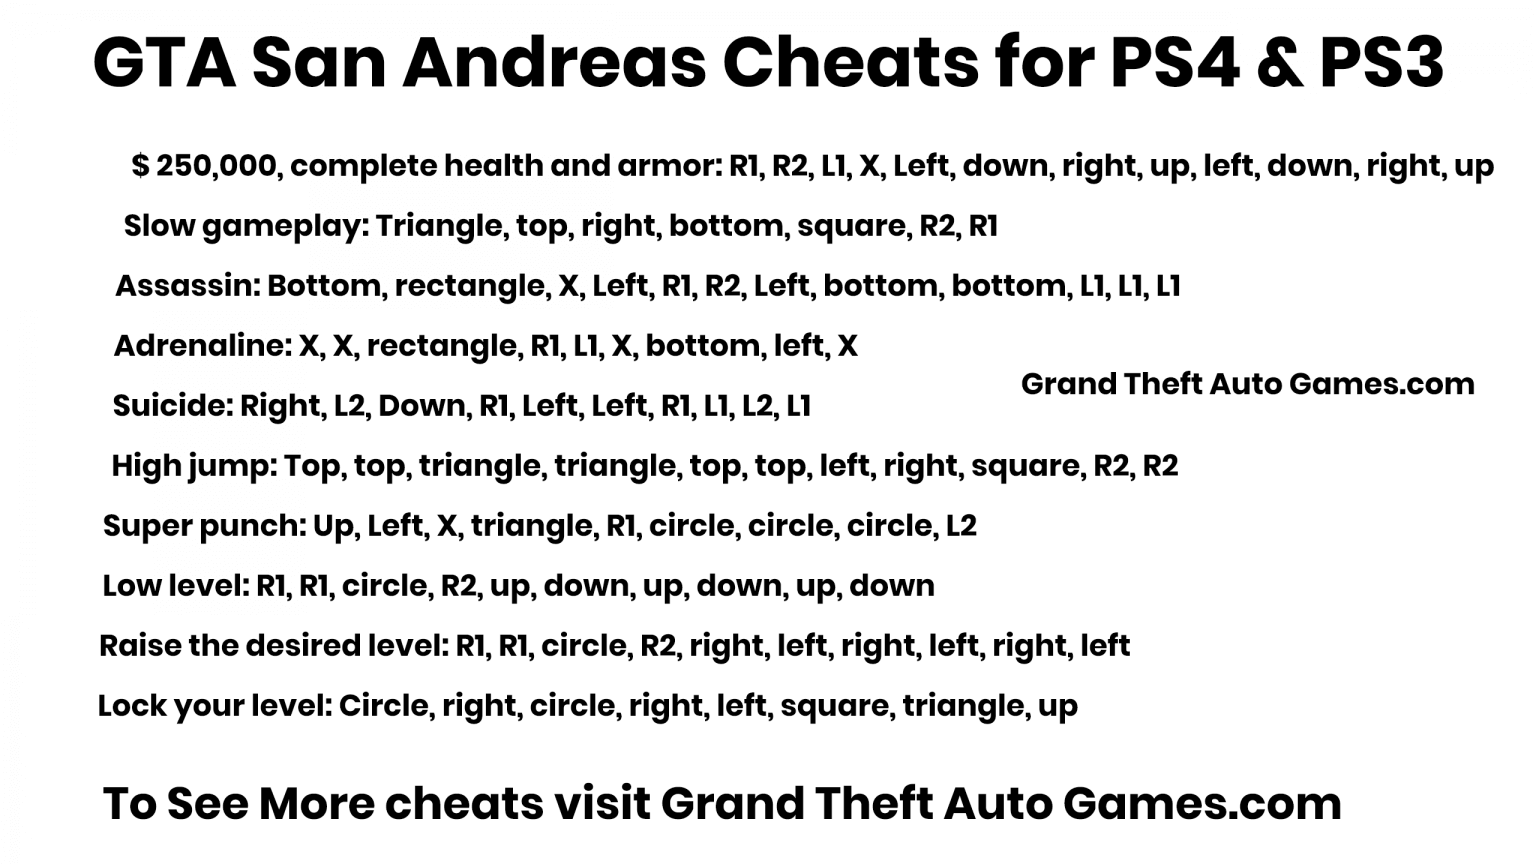 Grand Theft Auto Games 1536x864 